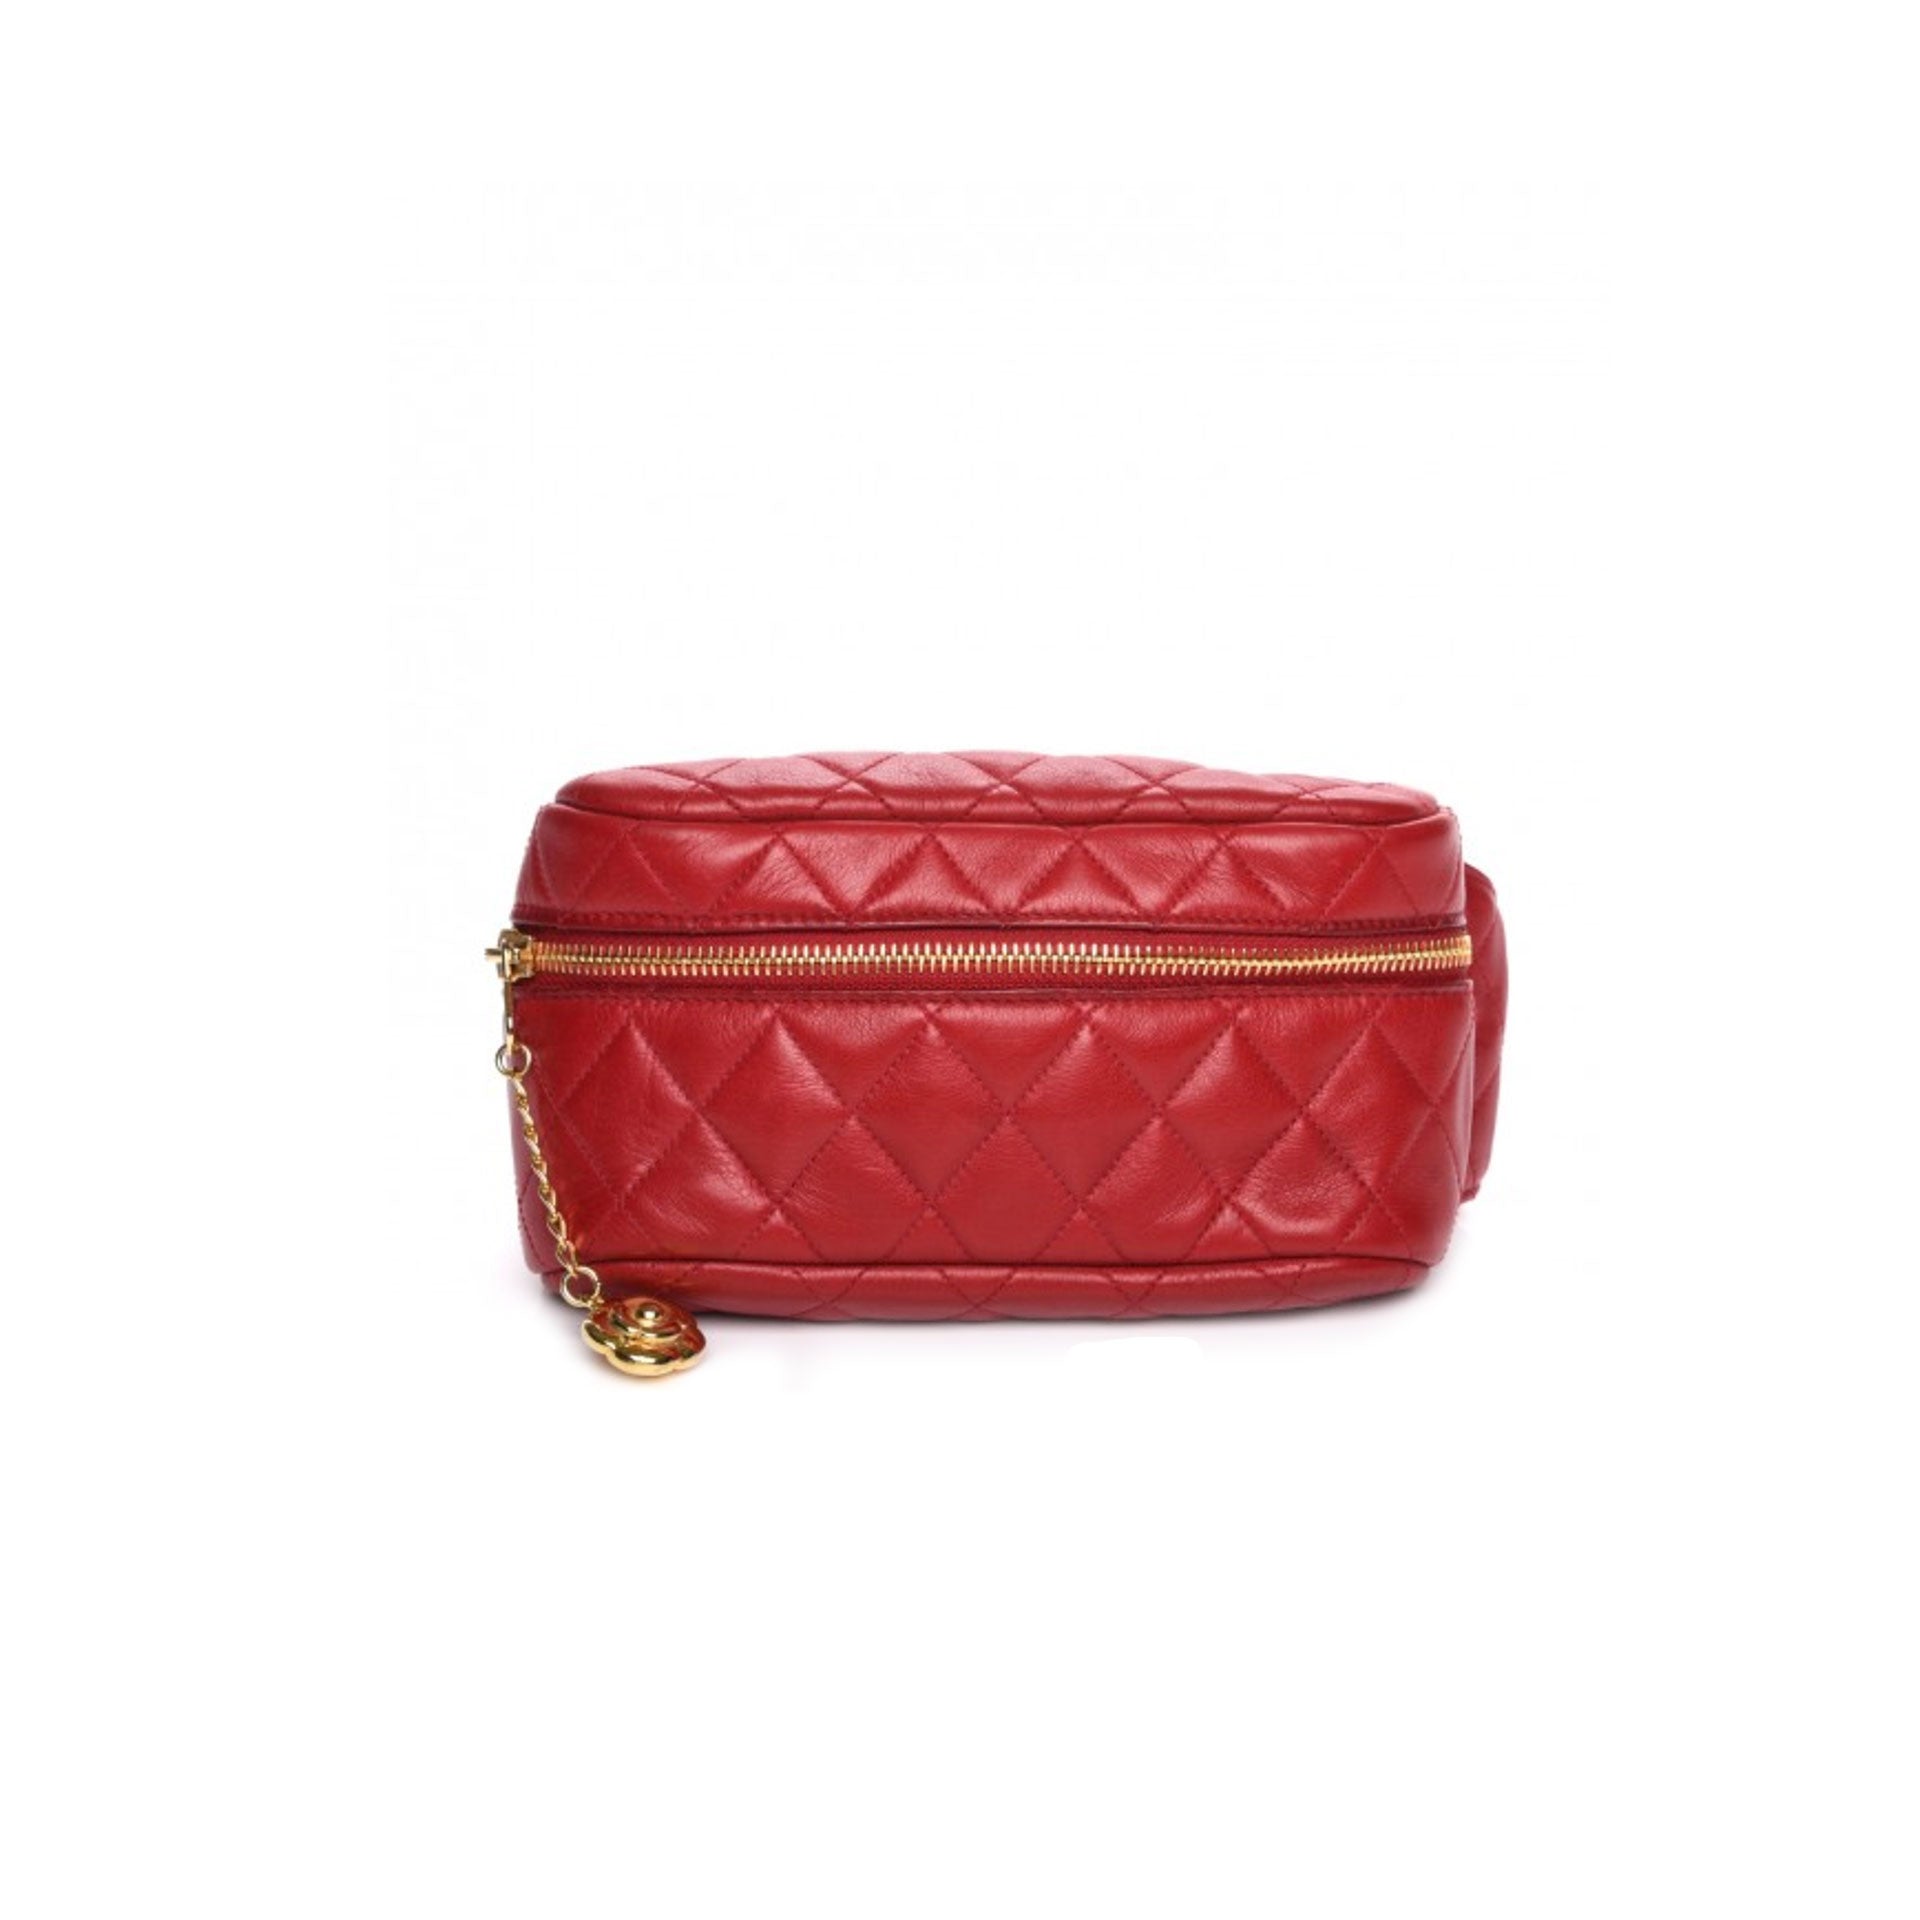 CHANEL Bicolore Waist Bum Bag Purse Pouch Red Leather Vintage